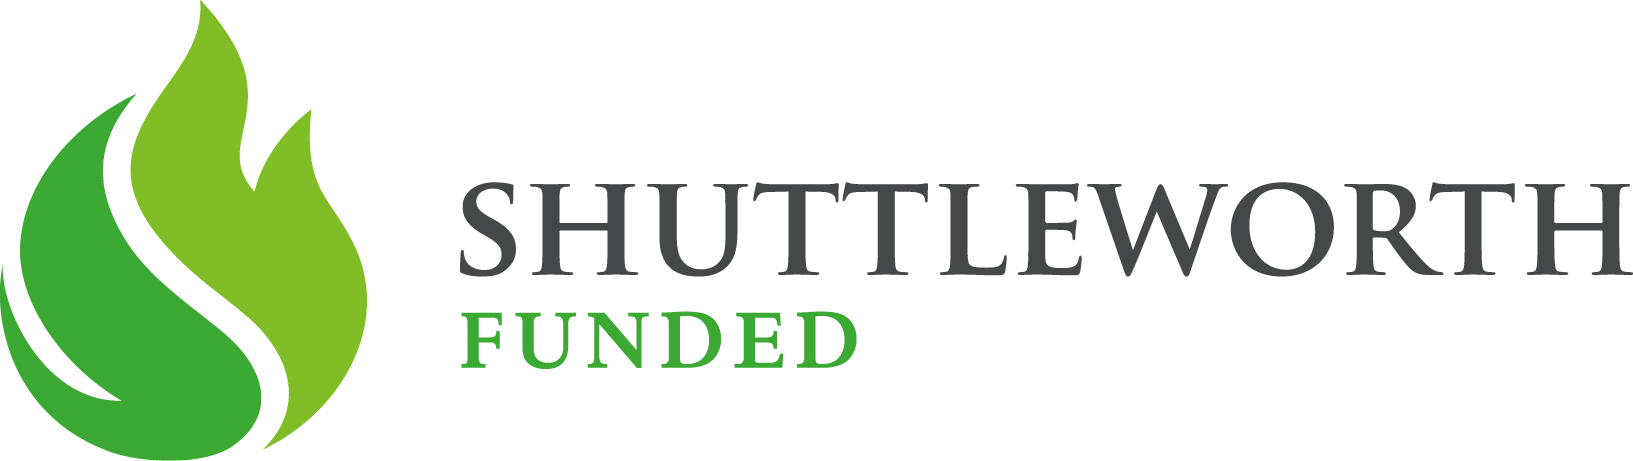 Shuttleworth Foundation logo